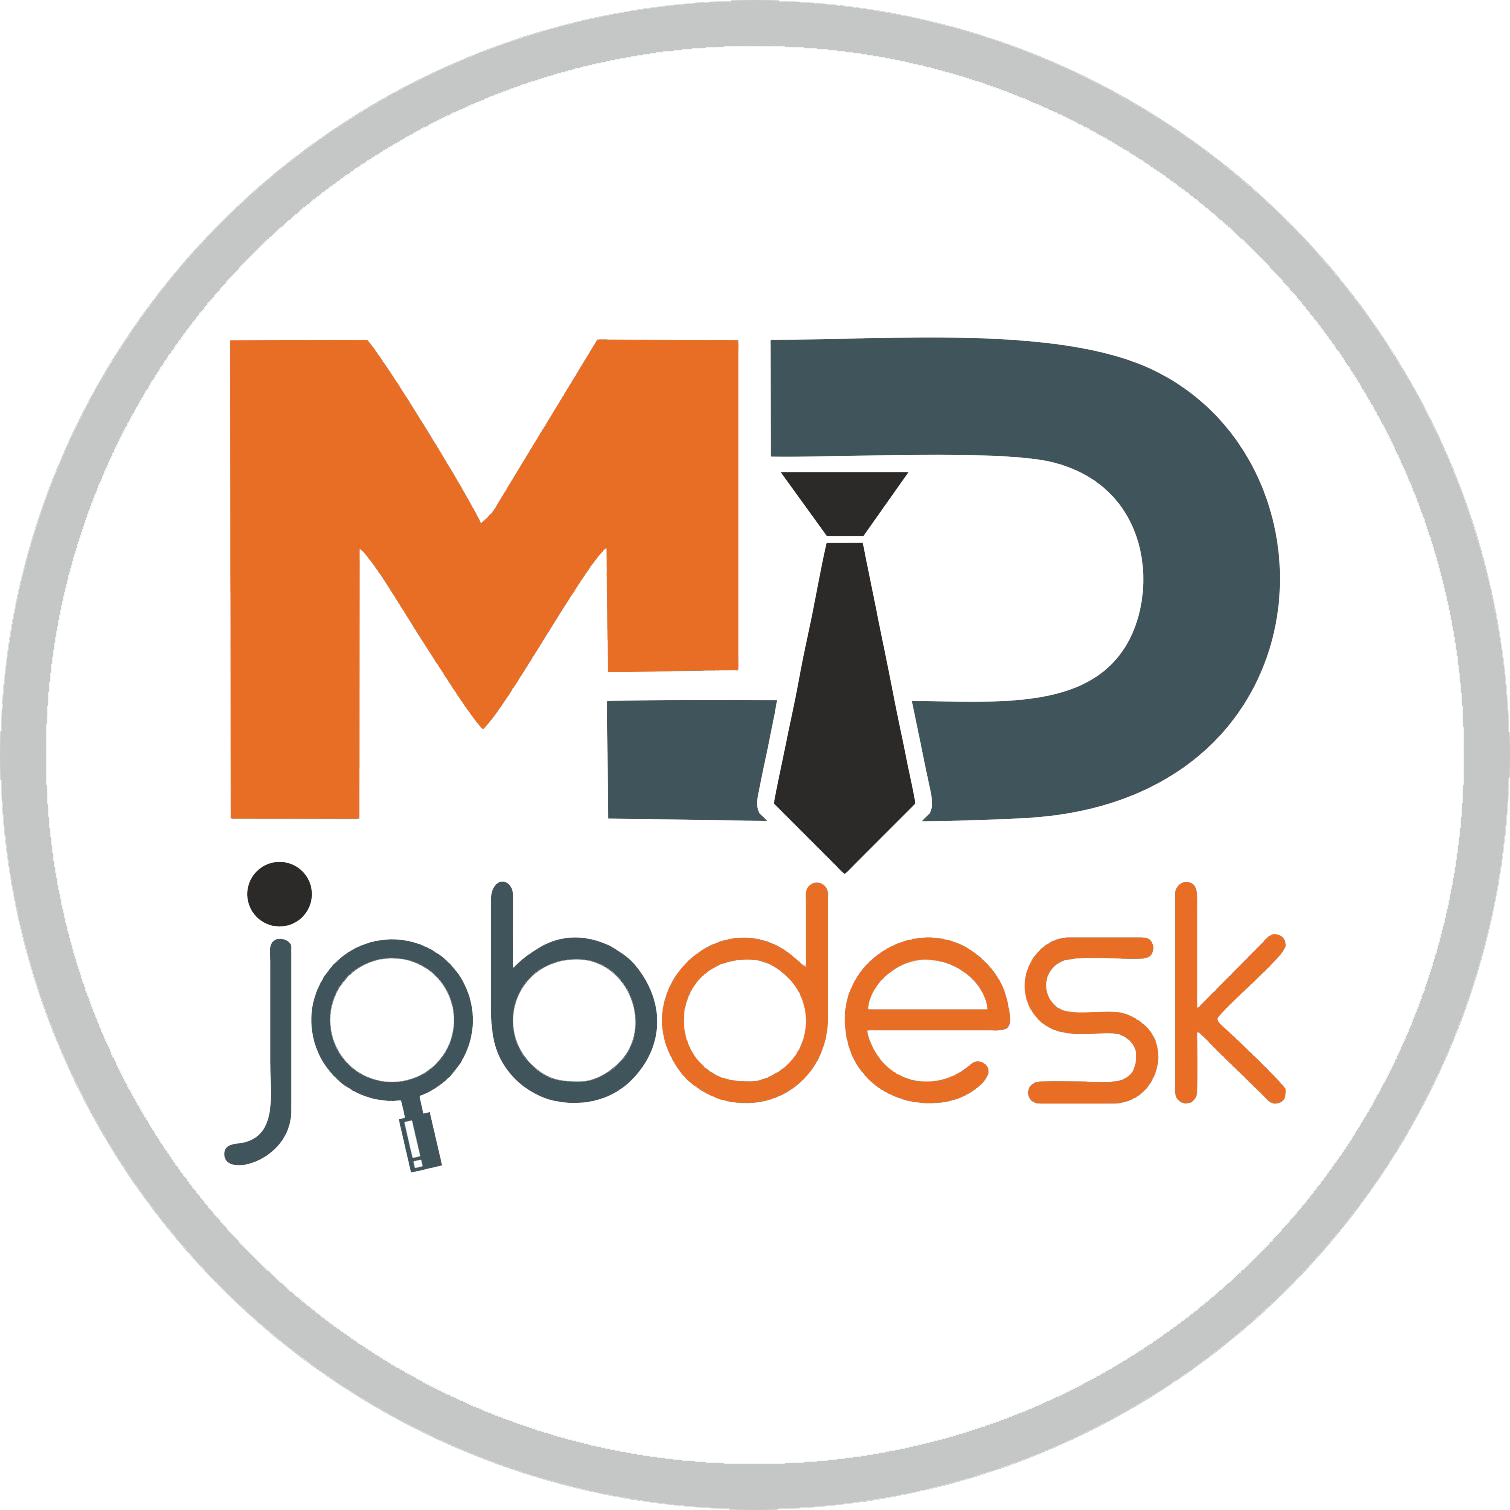 MD Jobdesk Logo